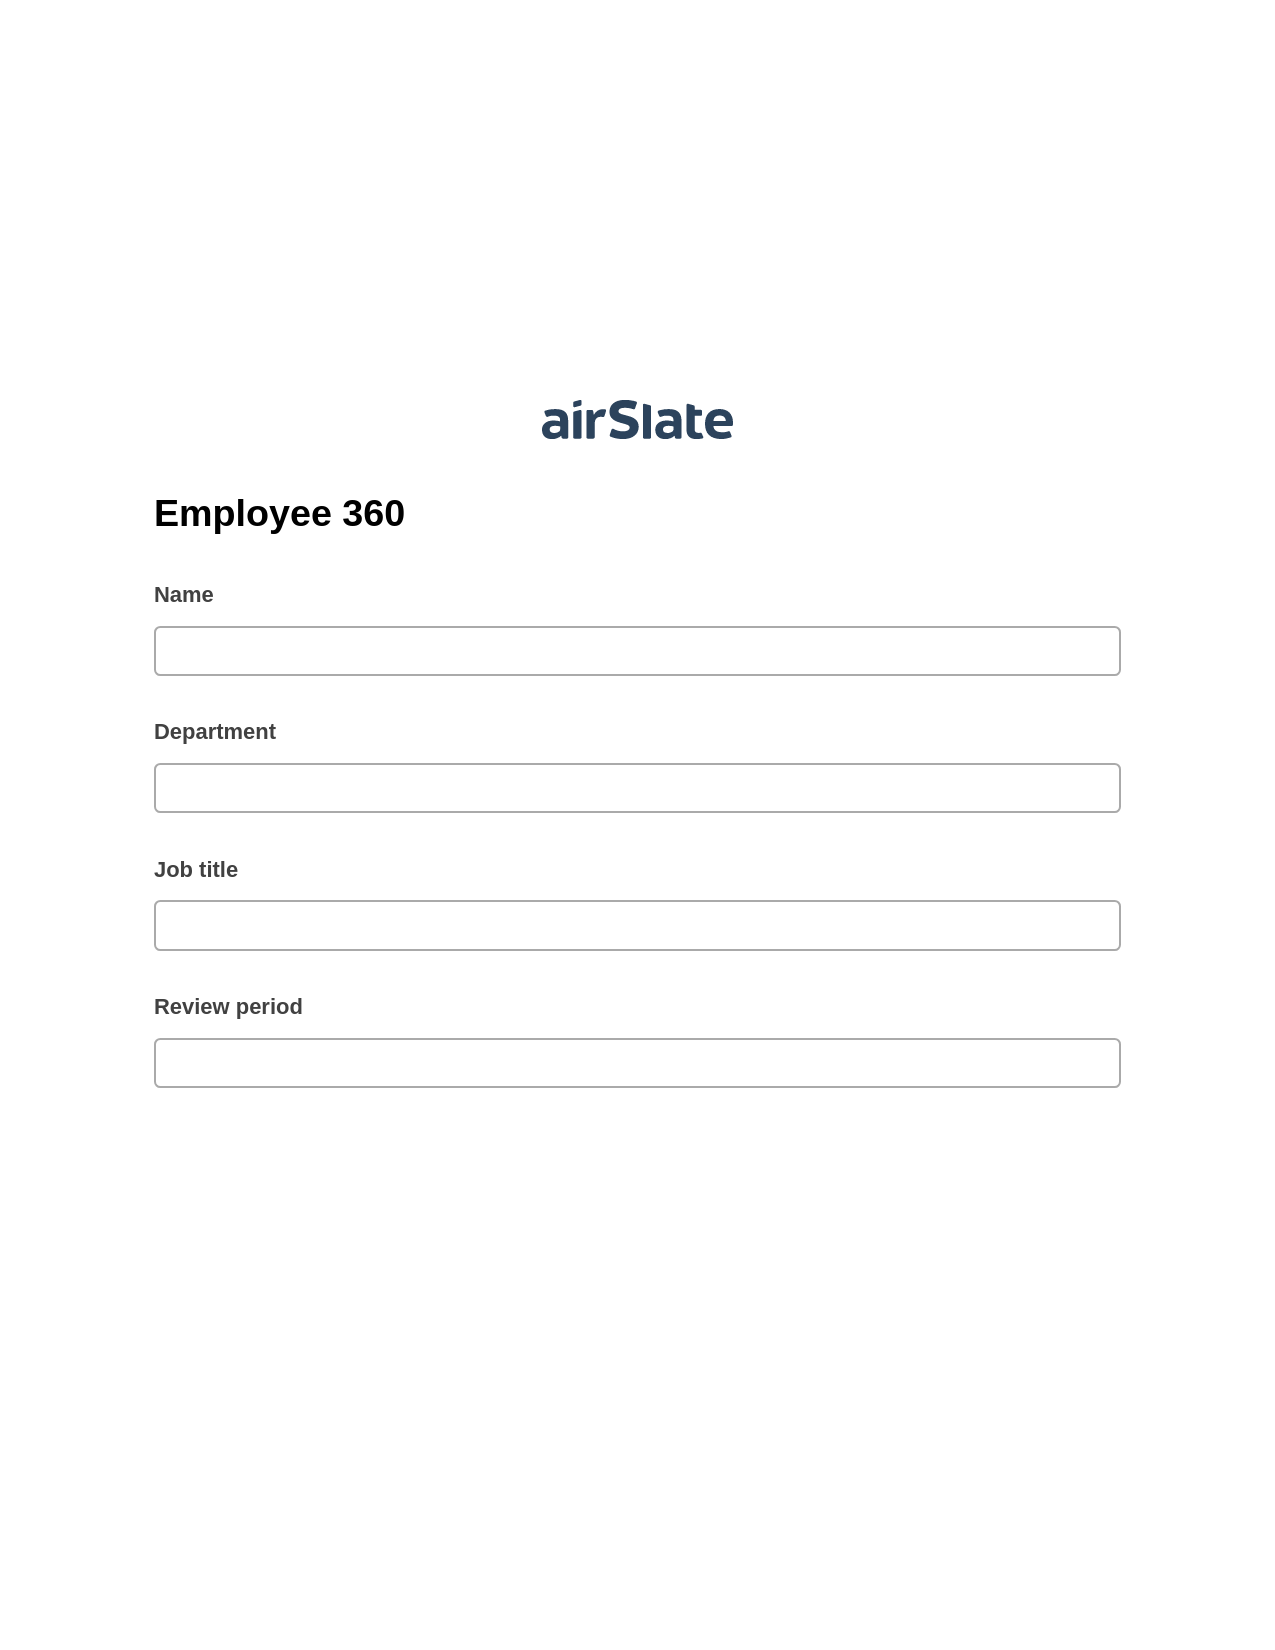 Employee 360 Pre-fill from Salesforce Records Bot, Google Cloud Print Bot, Export to Google Sheet Bot